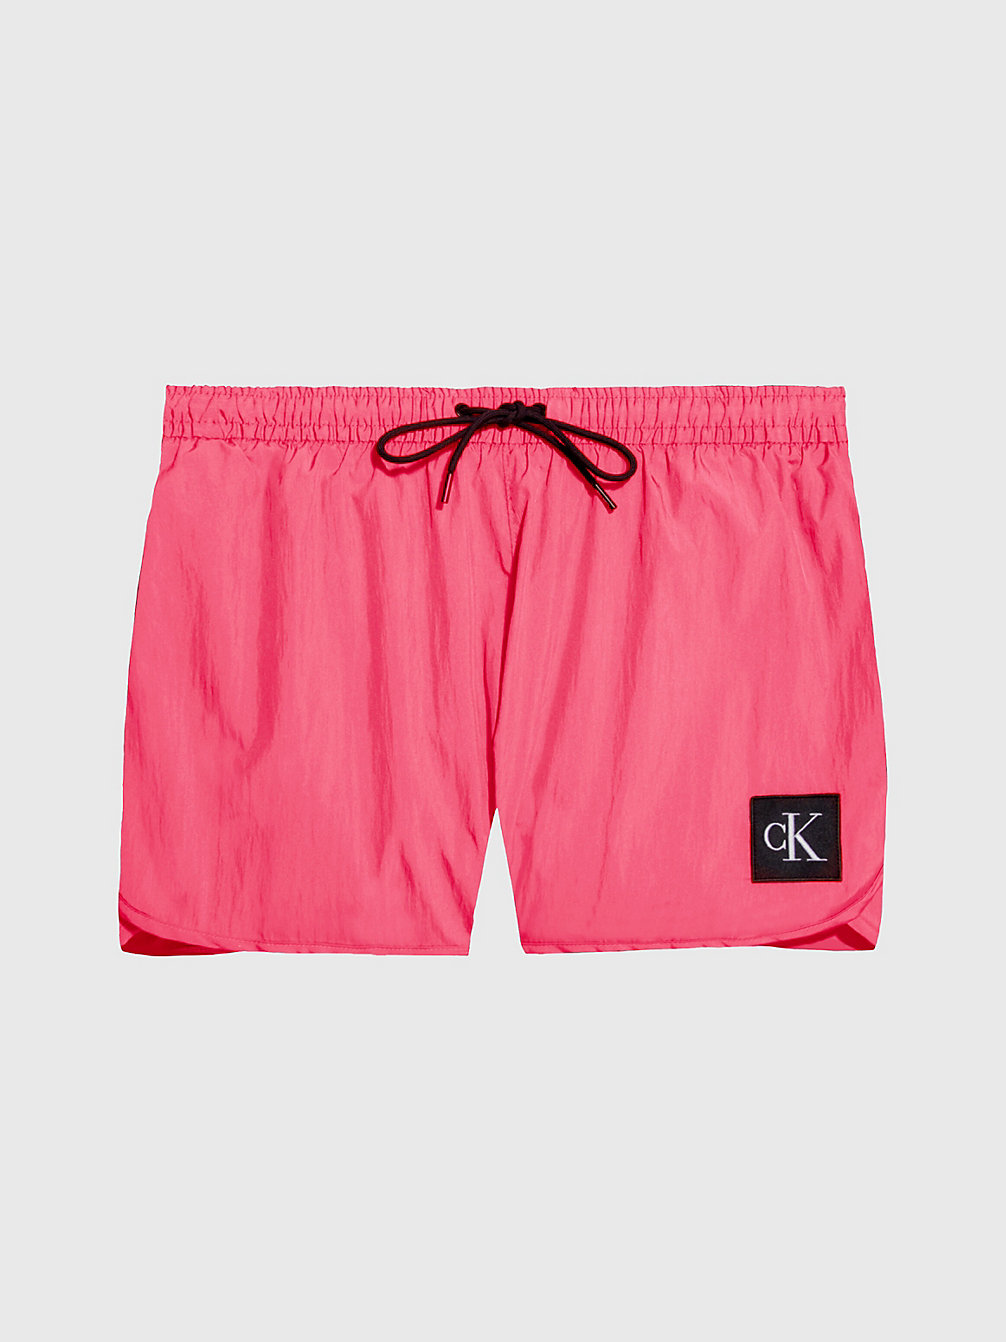 PINK FLASH Short Runner Swim Shorts - CK Nylon undefined men Calvin Klein